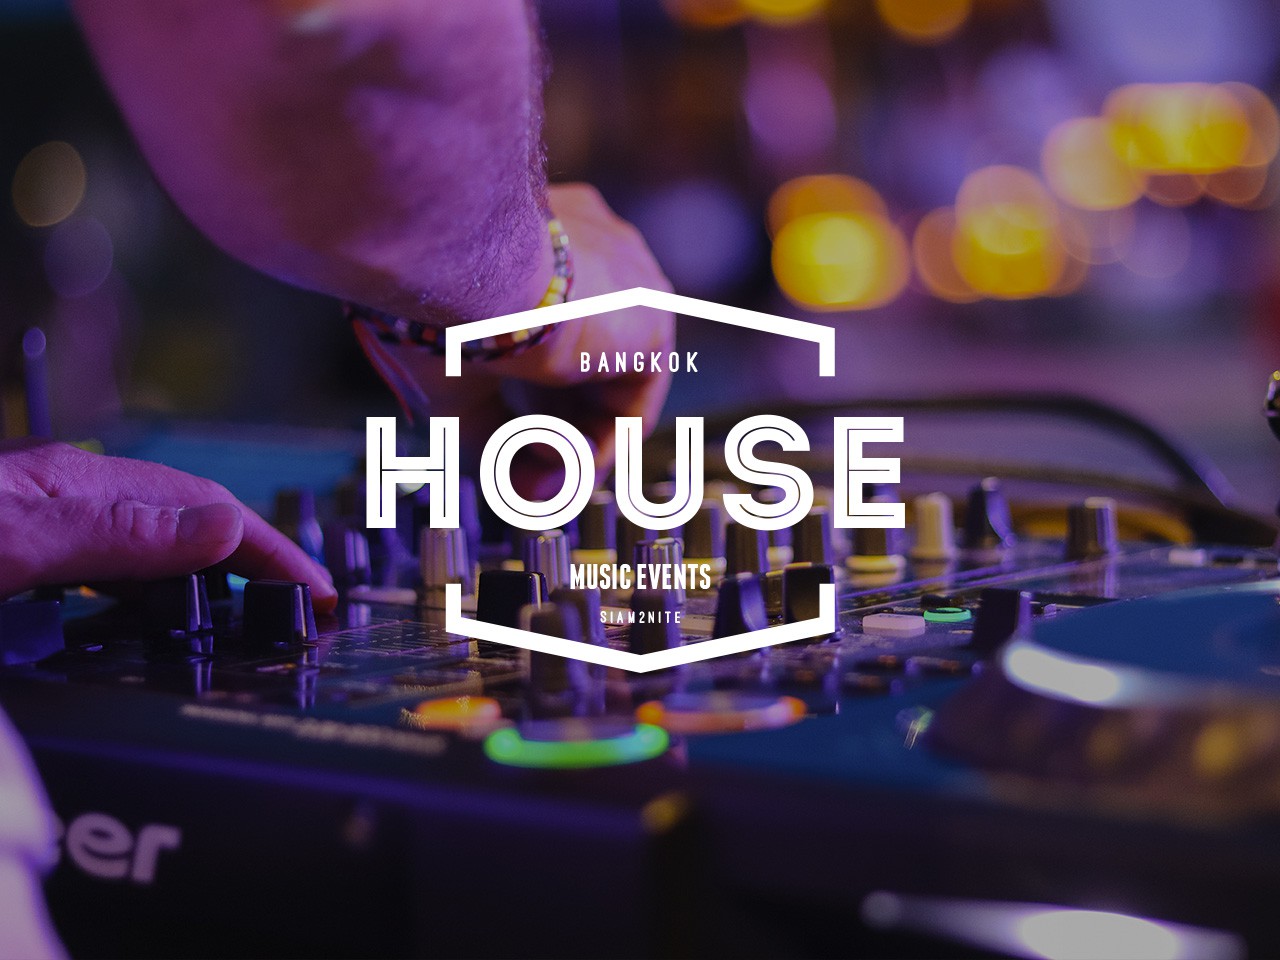 House Music Events In Bangkok Siam2nite